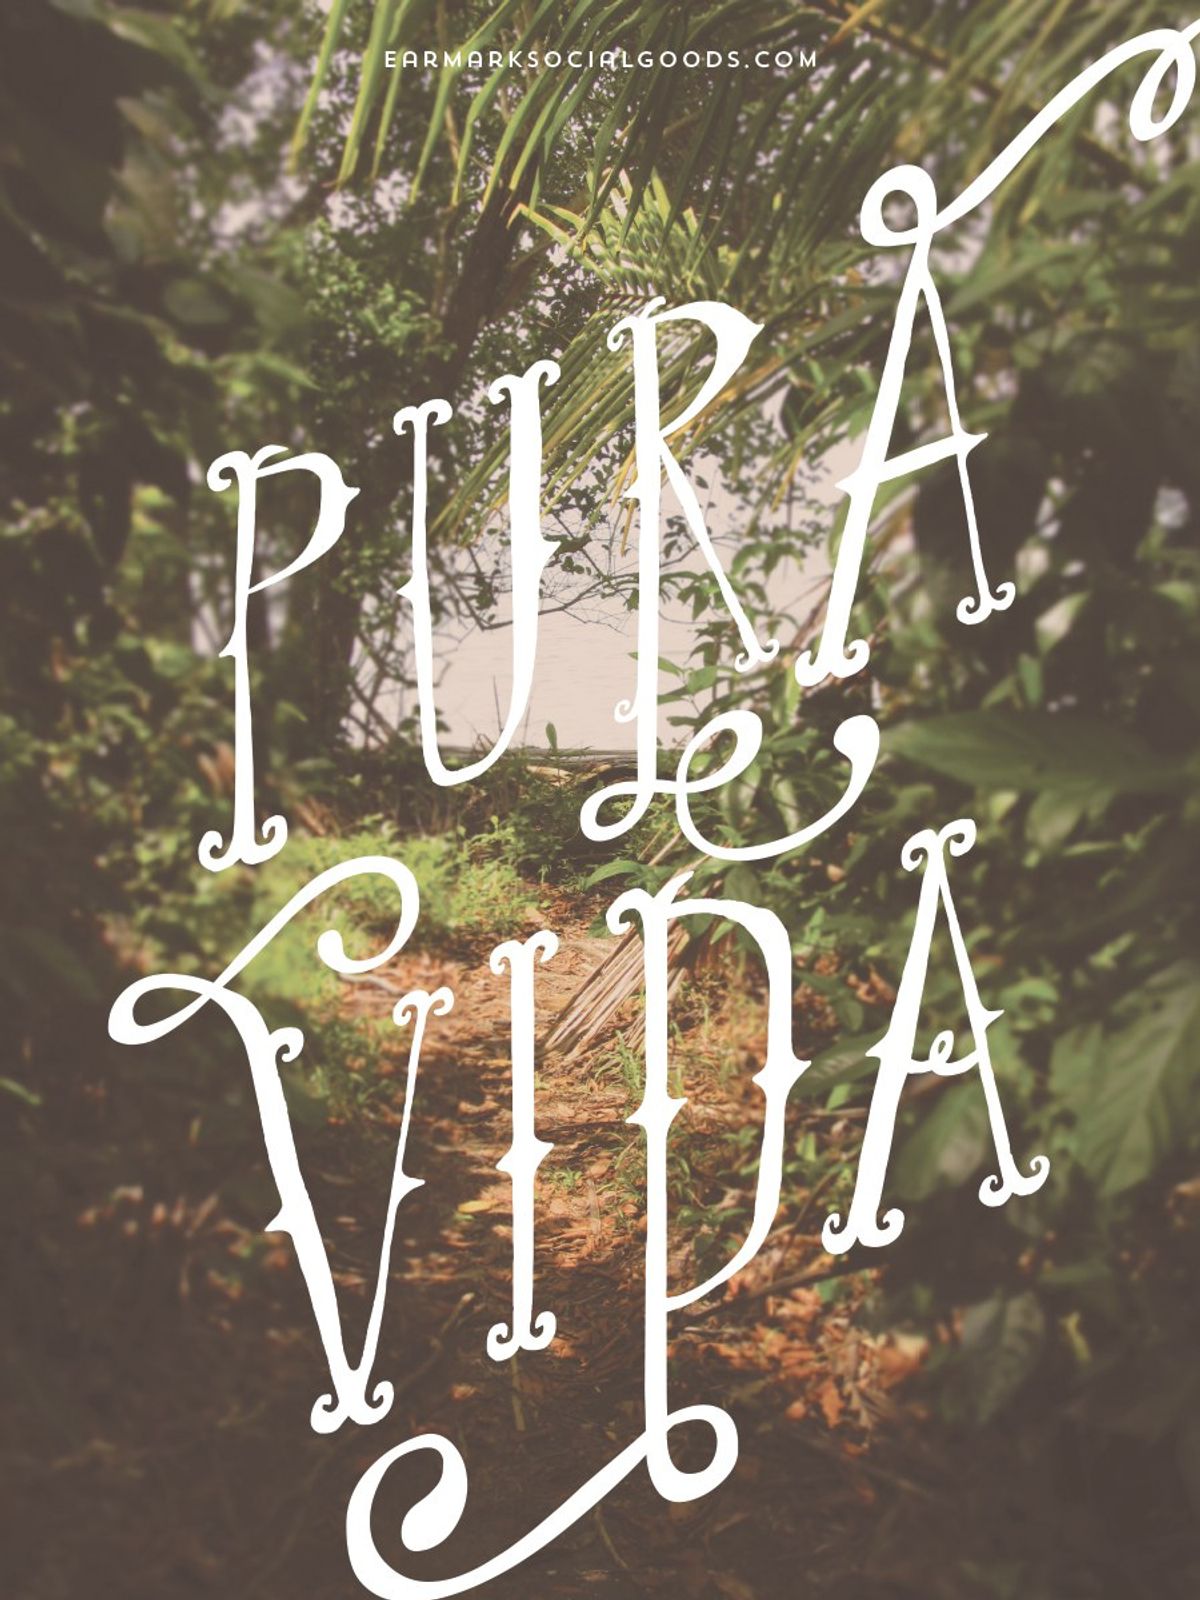 The Saying of Costa Rica: Pura Vida